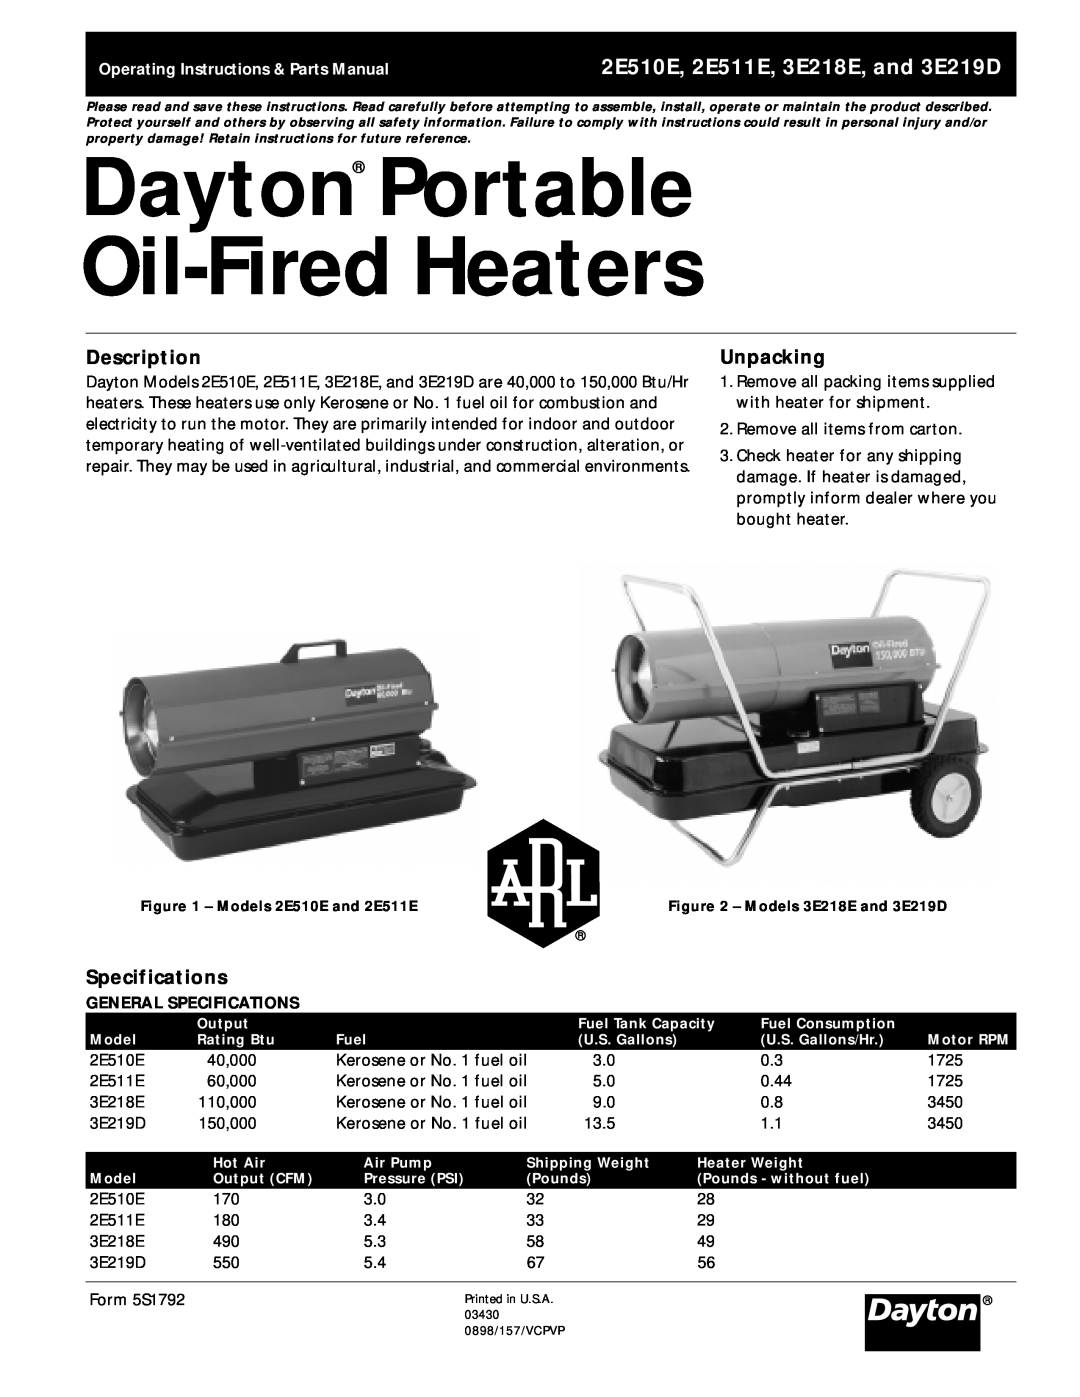 Dayton 2E510E, 3E219D specifications Description, Unpacking, General Specifications, Dayton Portable Oil-FiredHeaters 